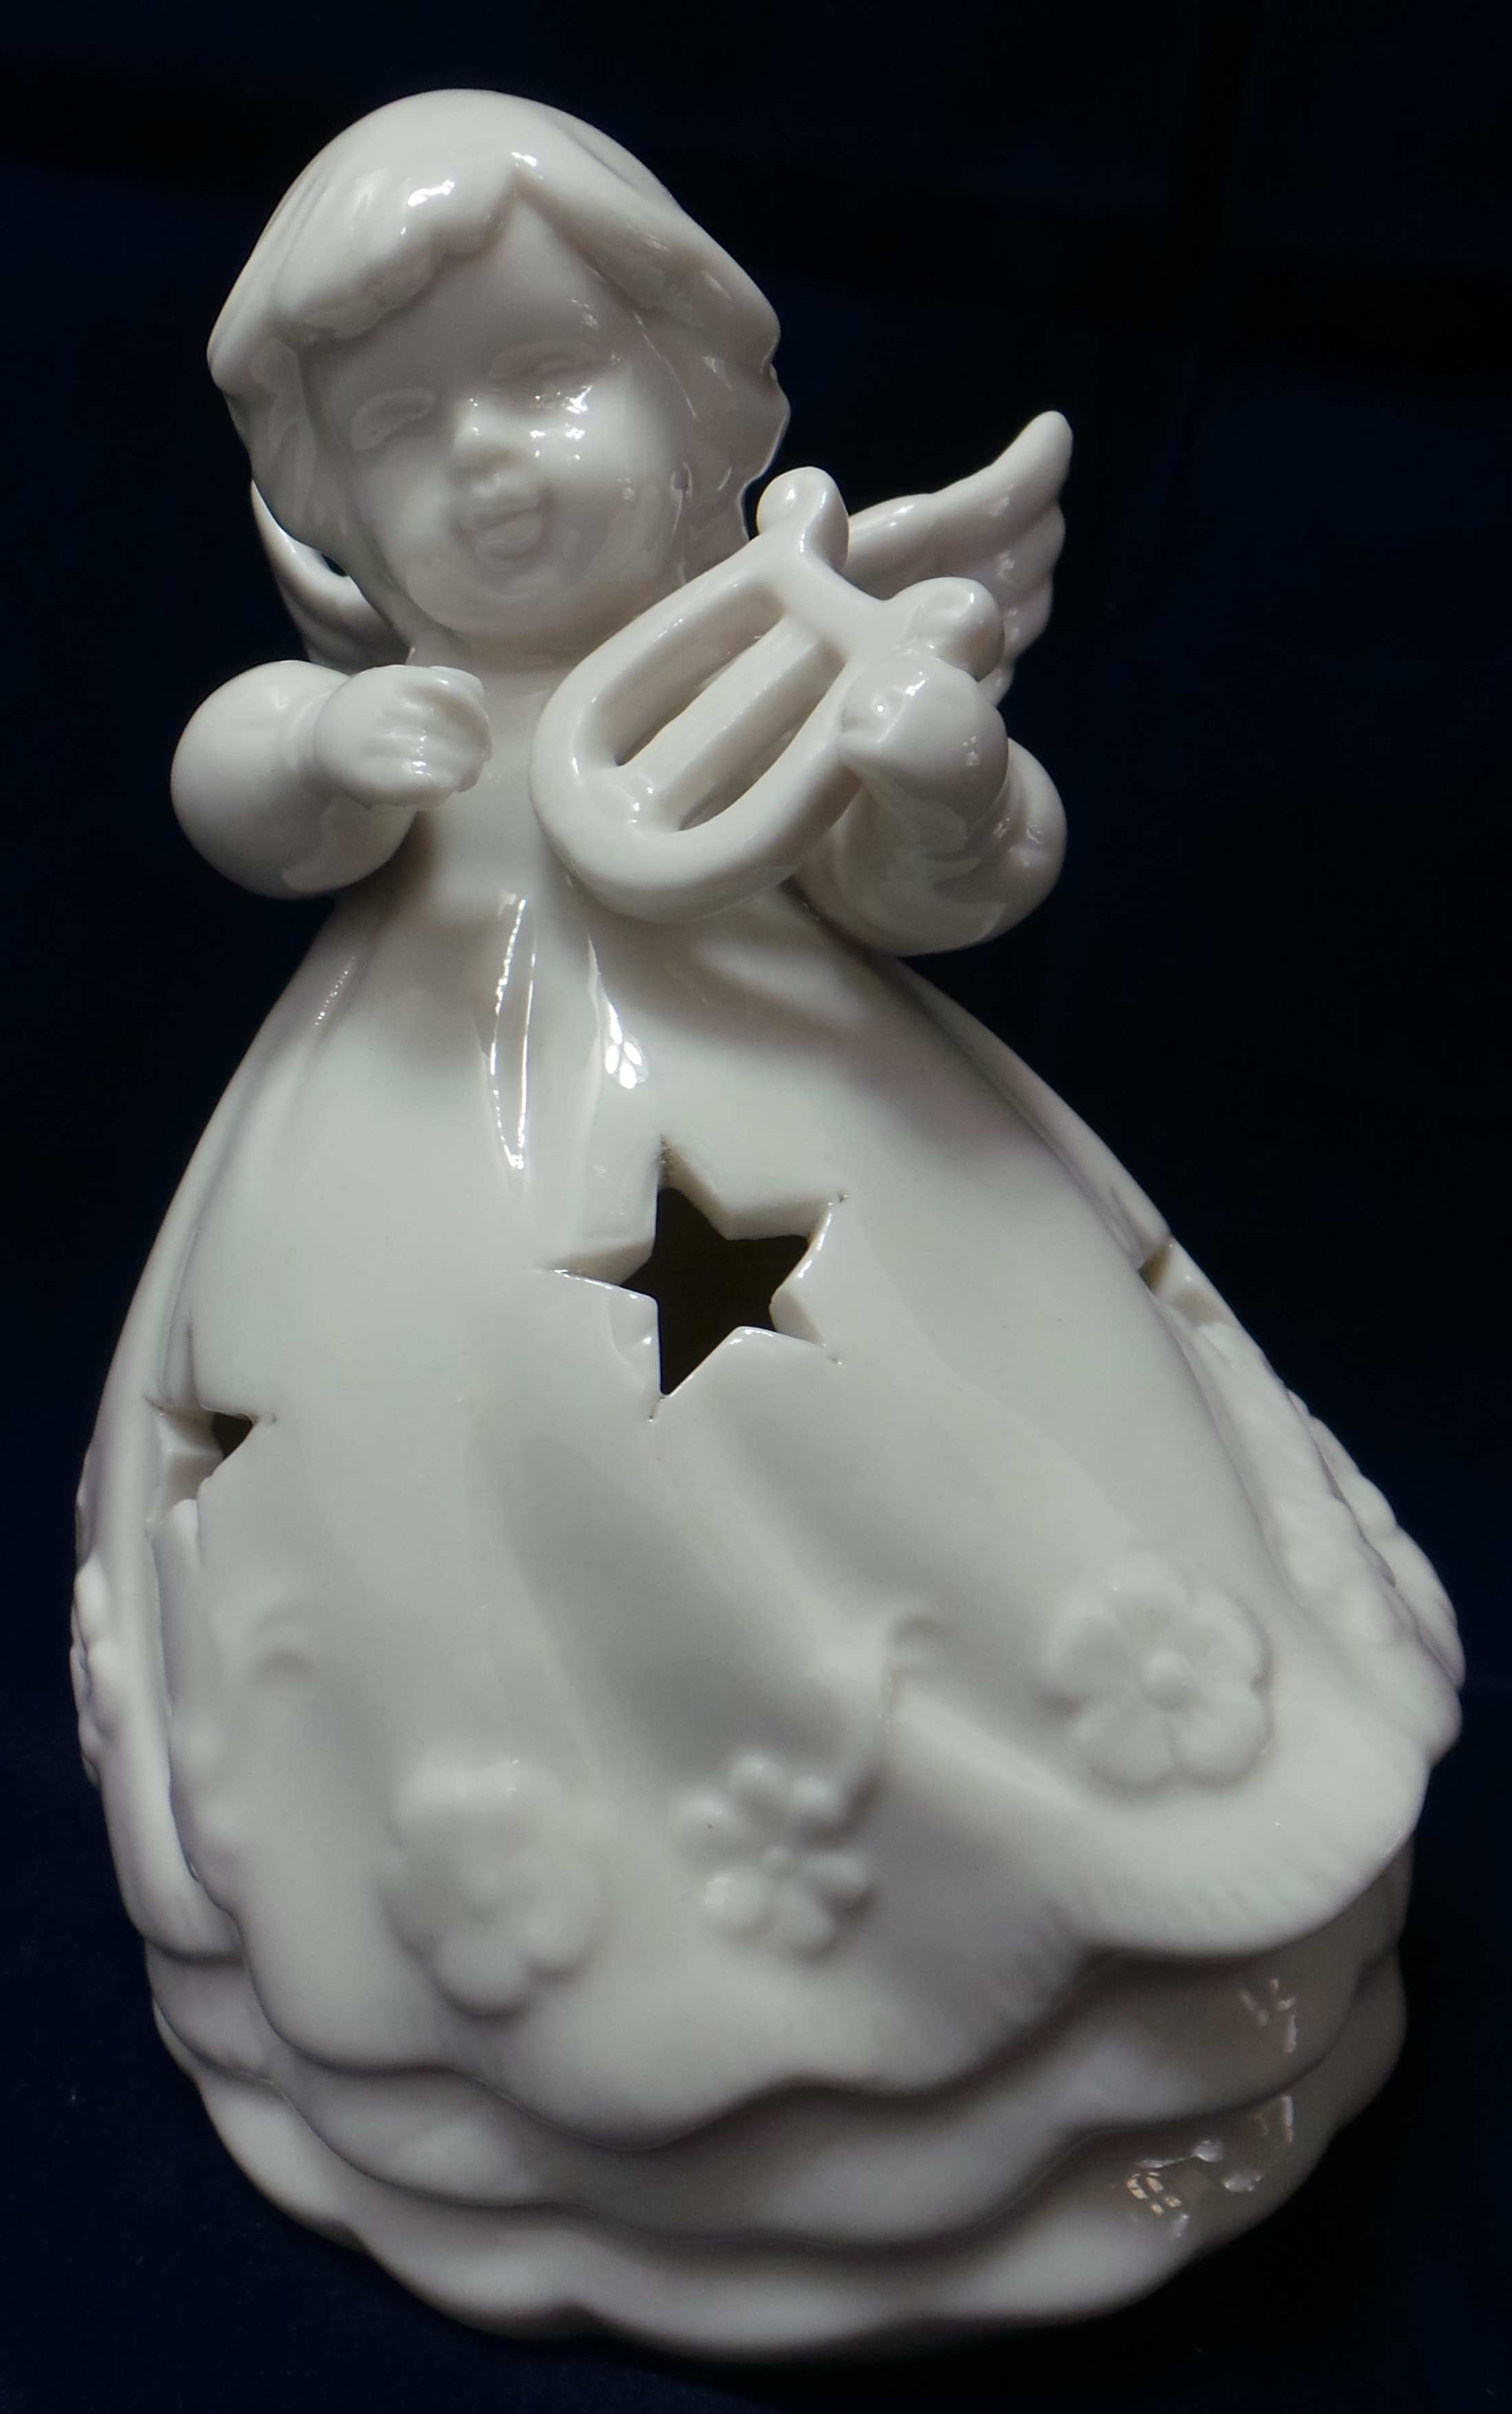 Wholesale Joblot of 20 Madame Posh Lighting Angel Figurines - White